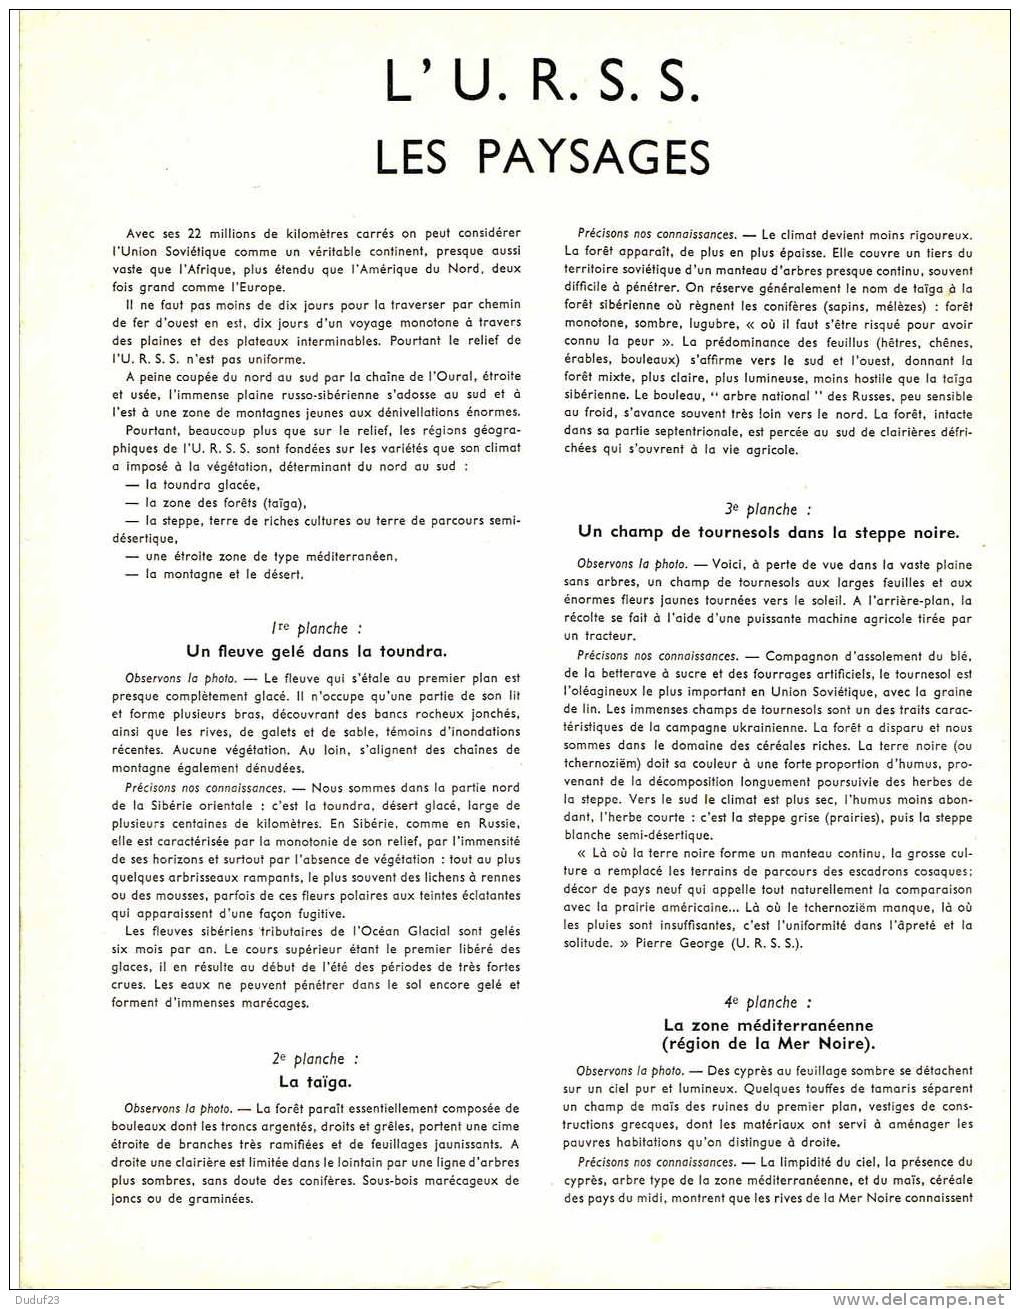 URSS - PAYSAGES - DOCUMENTATION PEDAGOGIQUE ROSSIGNOL MONTMORILLON 1957 - Lesekarten